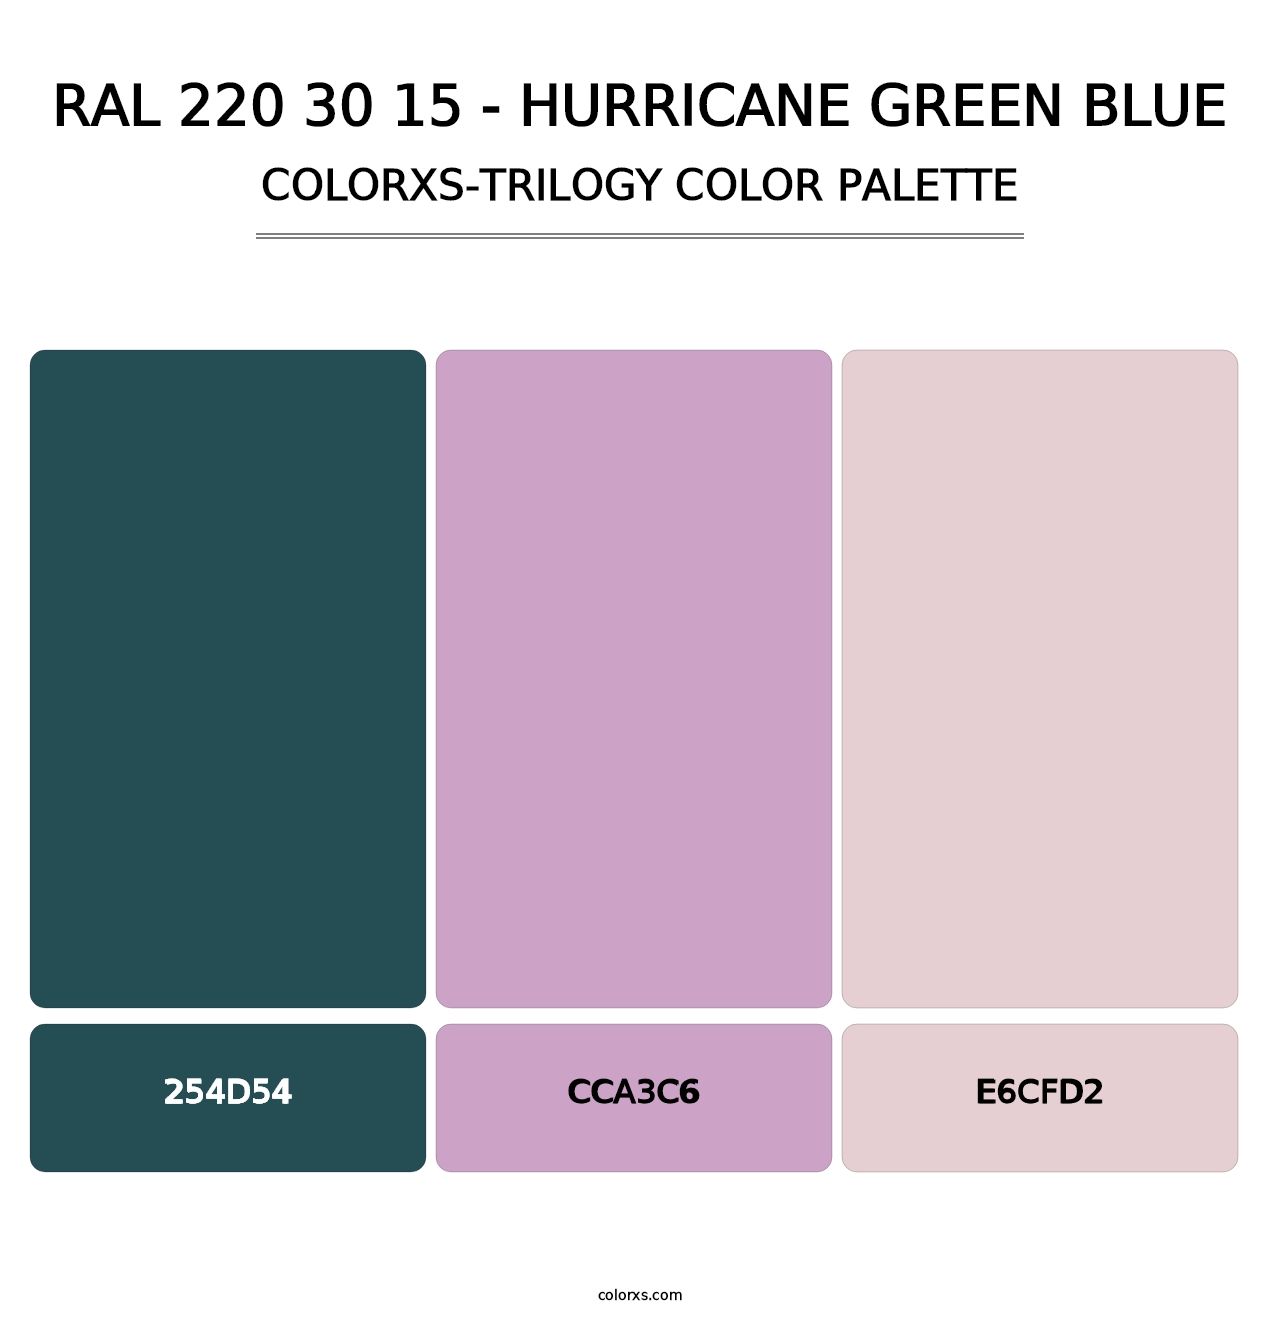 RAL 220 30 15 - Hurricane Green Blue - Colorxs Trilogy Palette